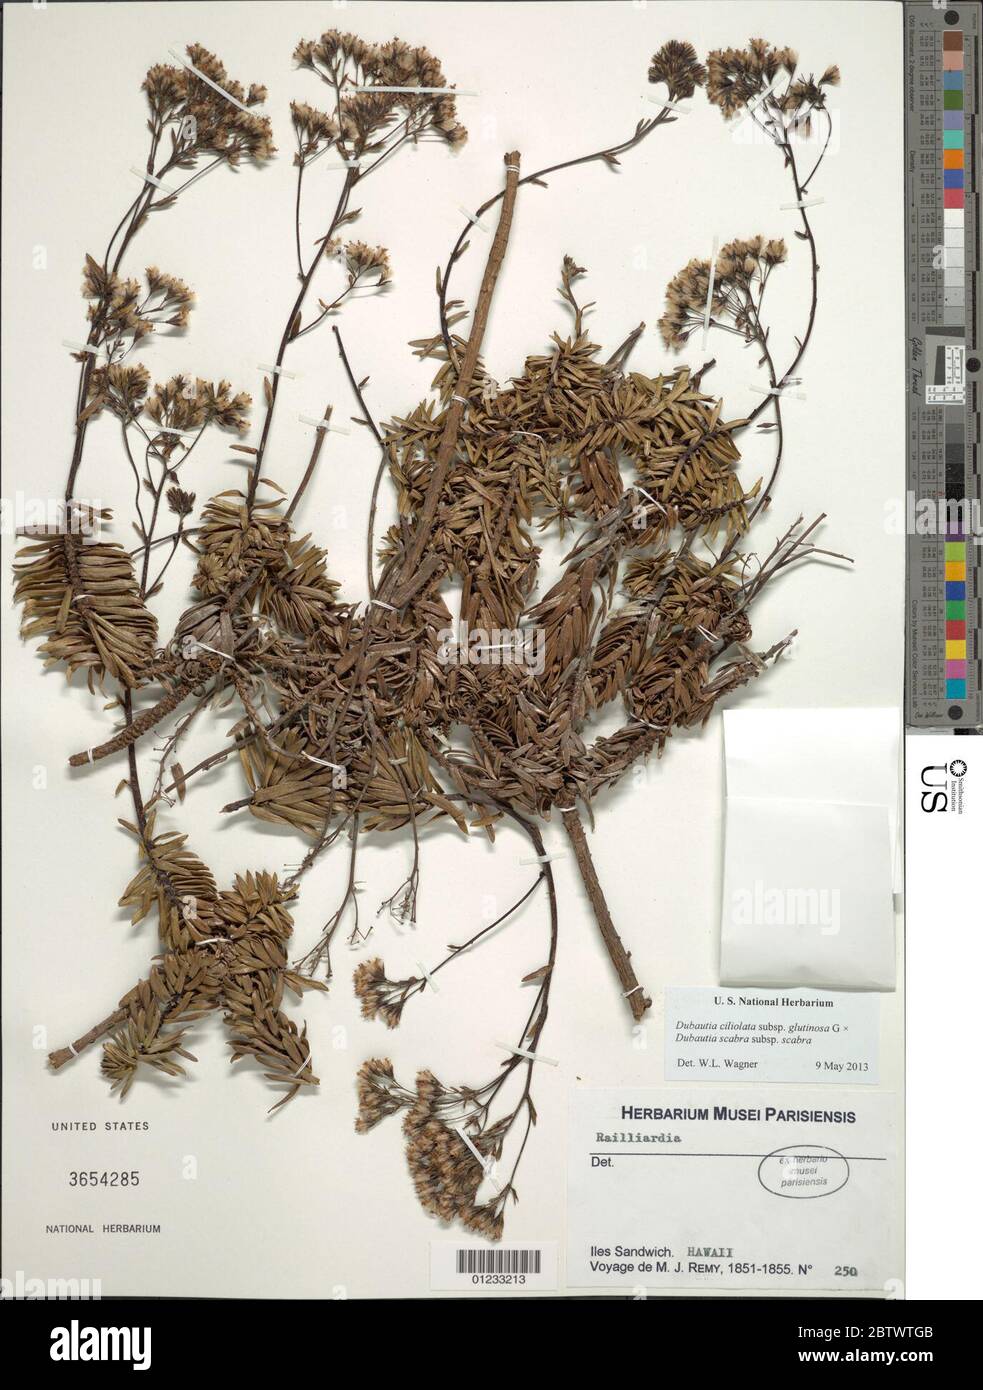 Dubautia hybrid. Stock Photo